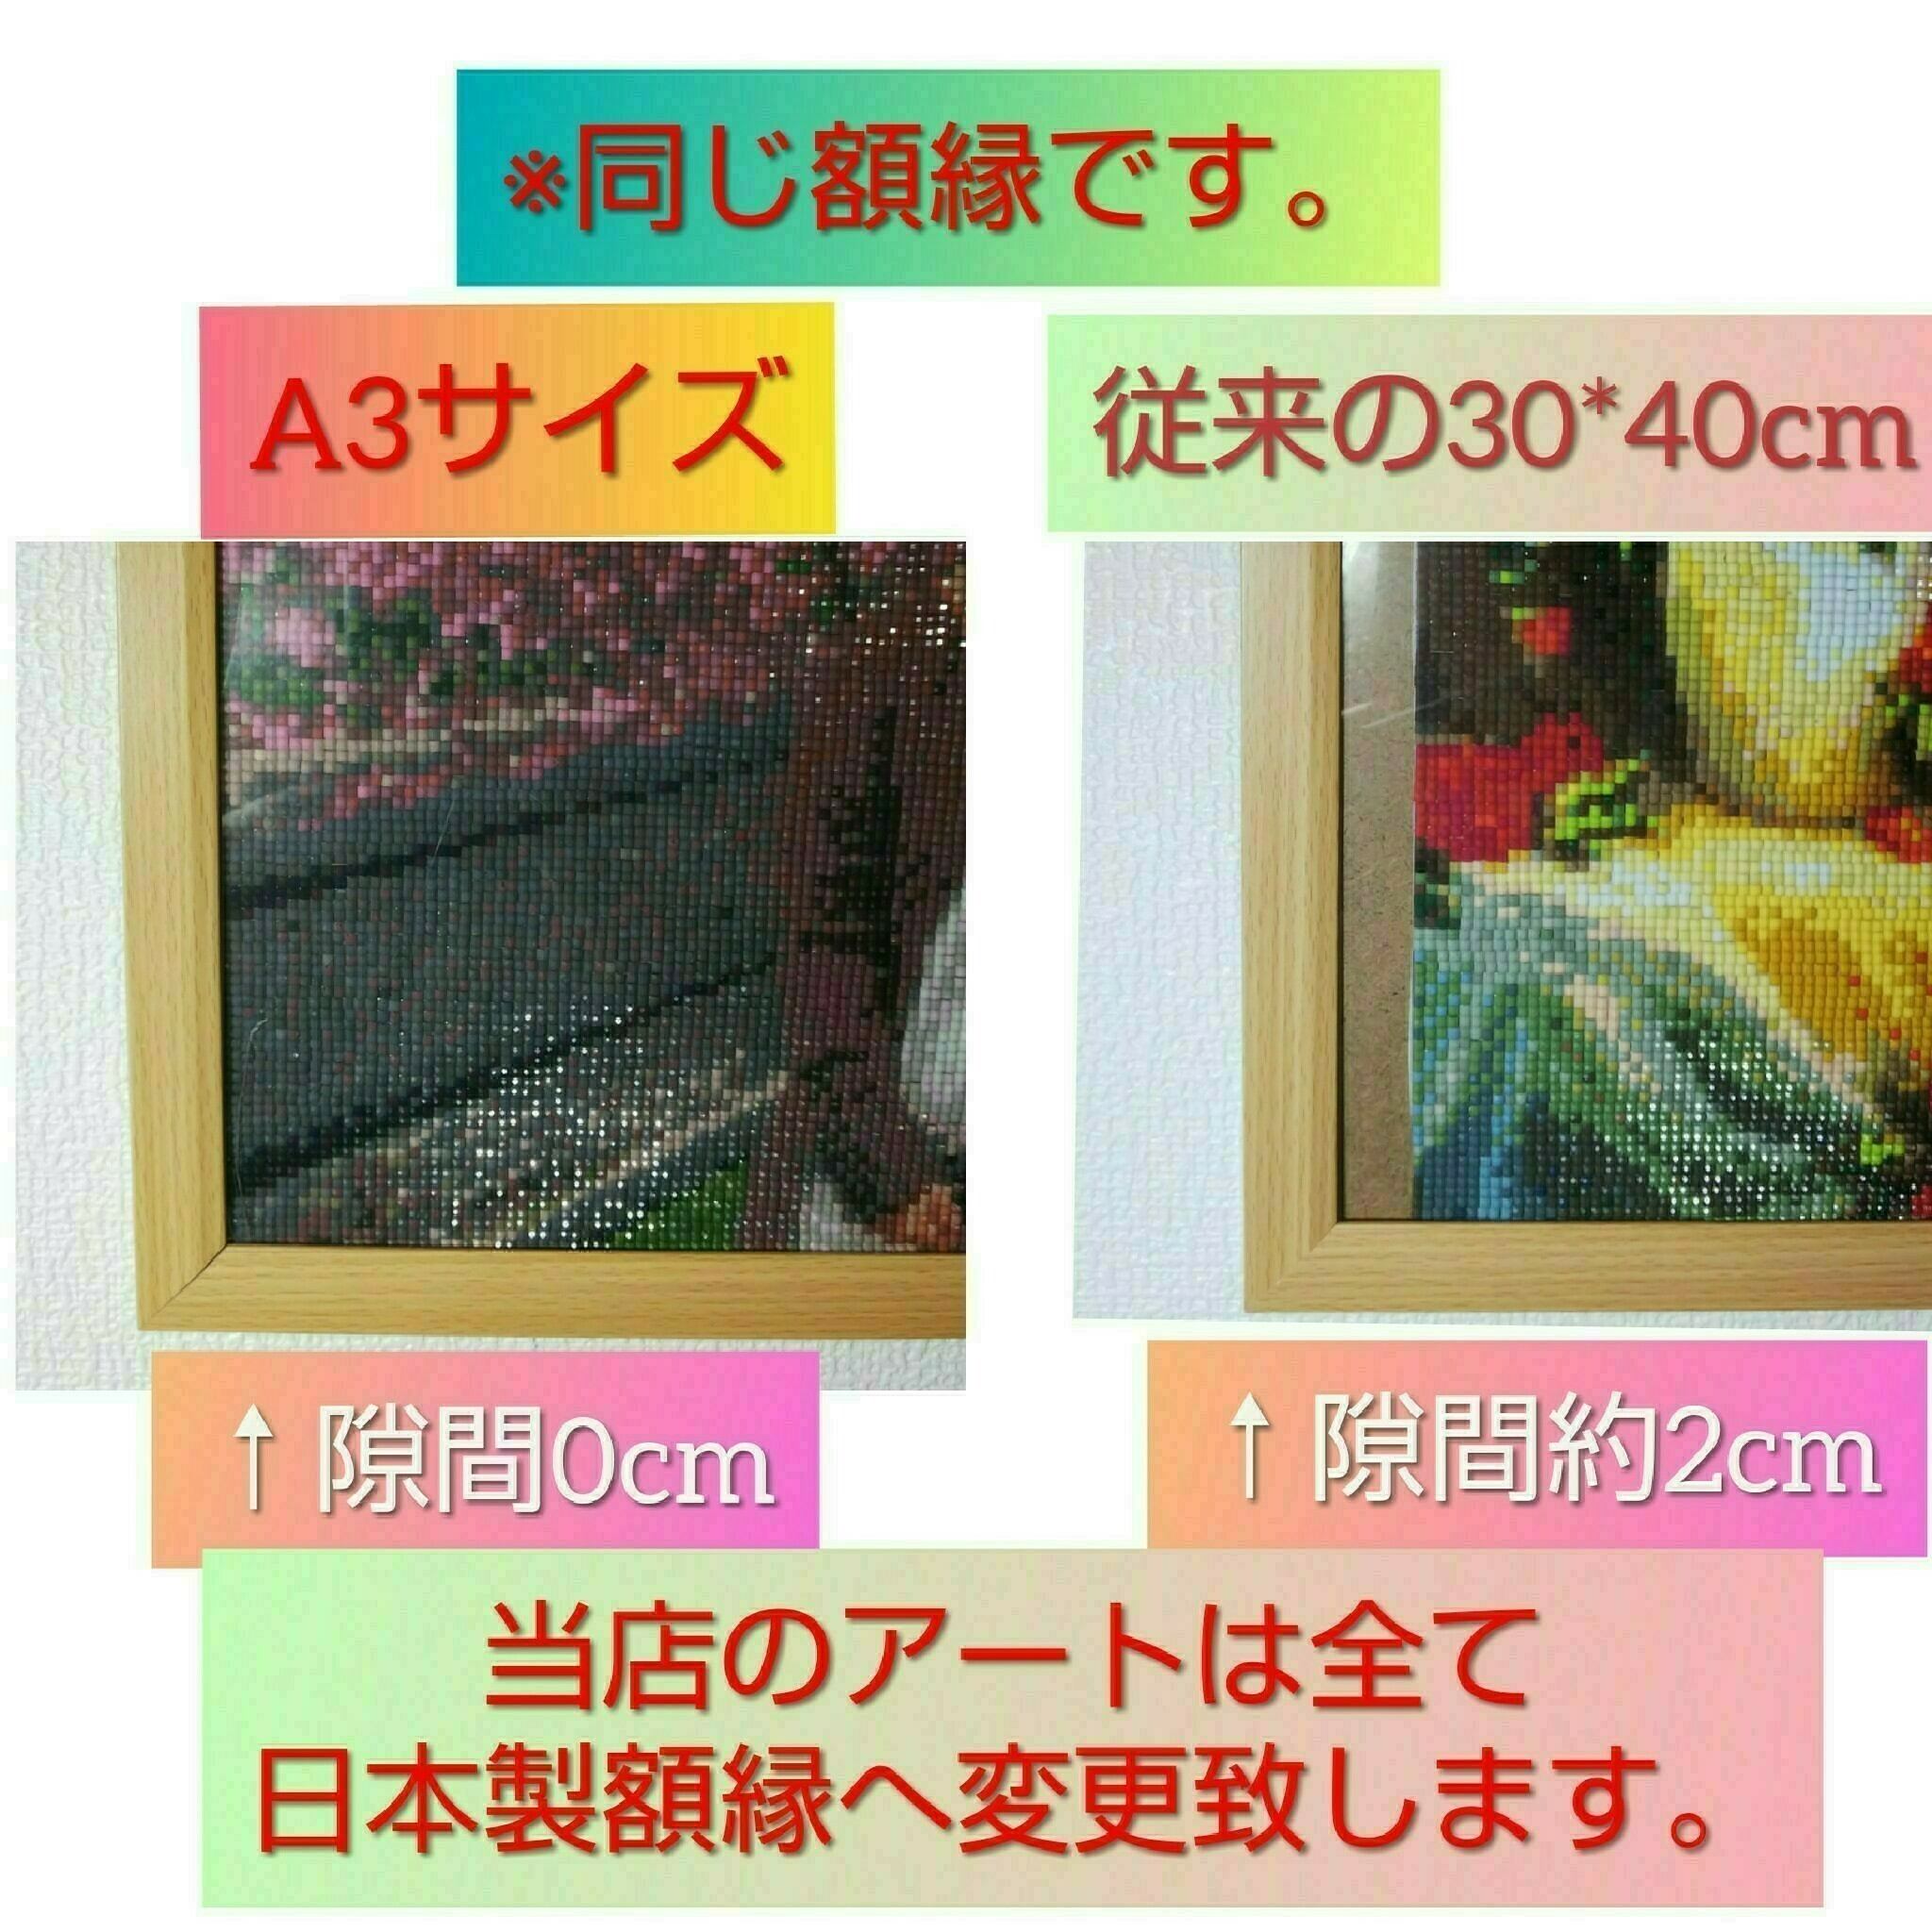 A3サイズ 四角ビーズ【runa-524】ダイヤモンドアート